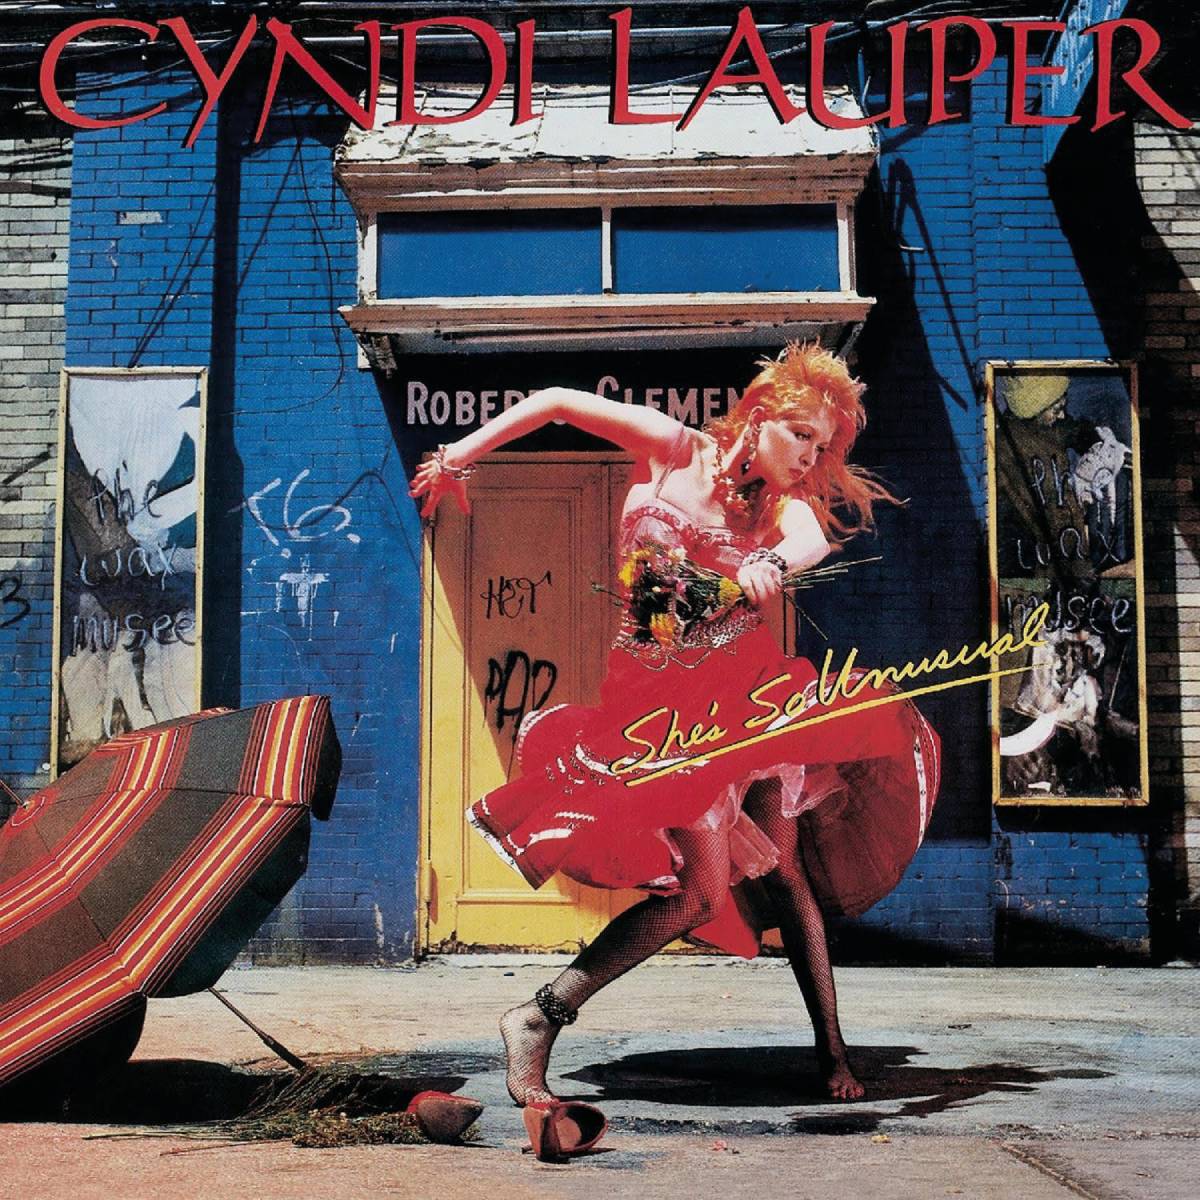 Girls Just Want to Have Fun (Cyndi Lauper)